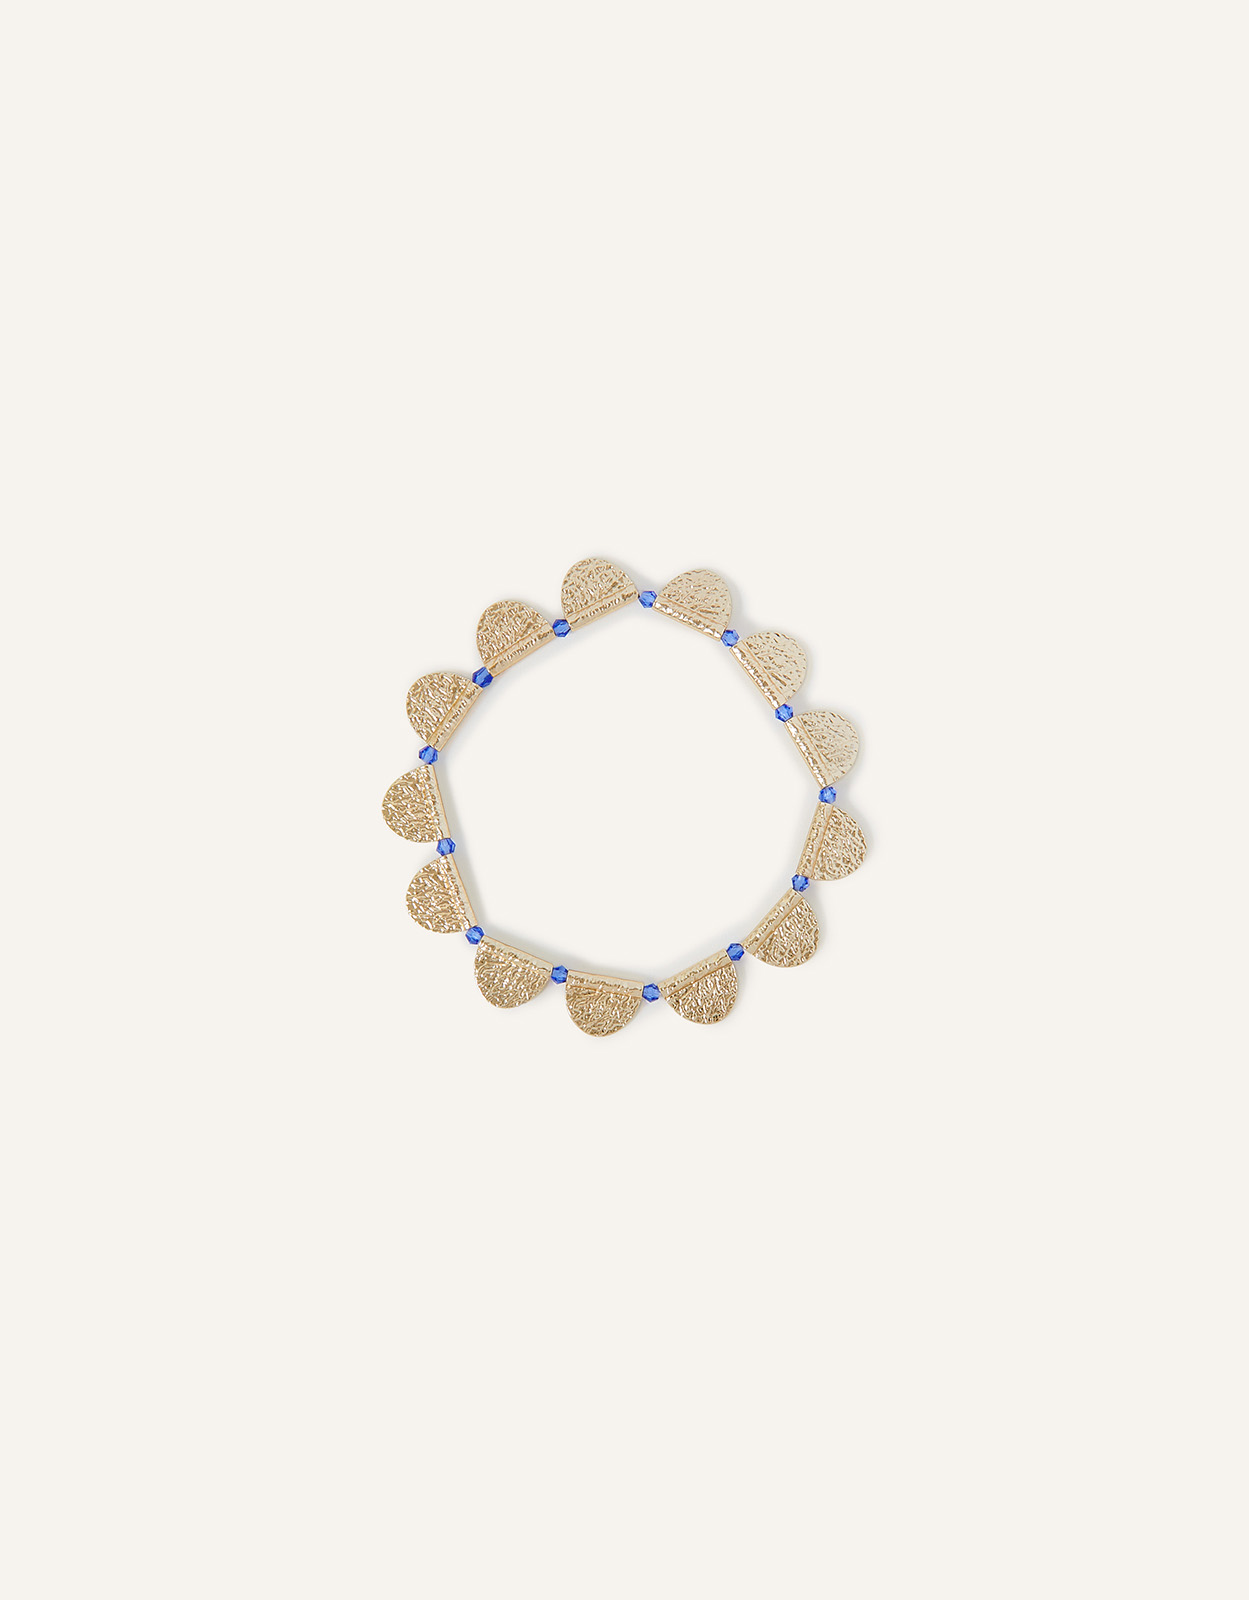 Accessorize Women's Textured Semi Circle Bracelet